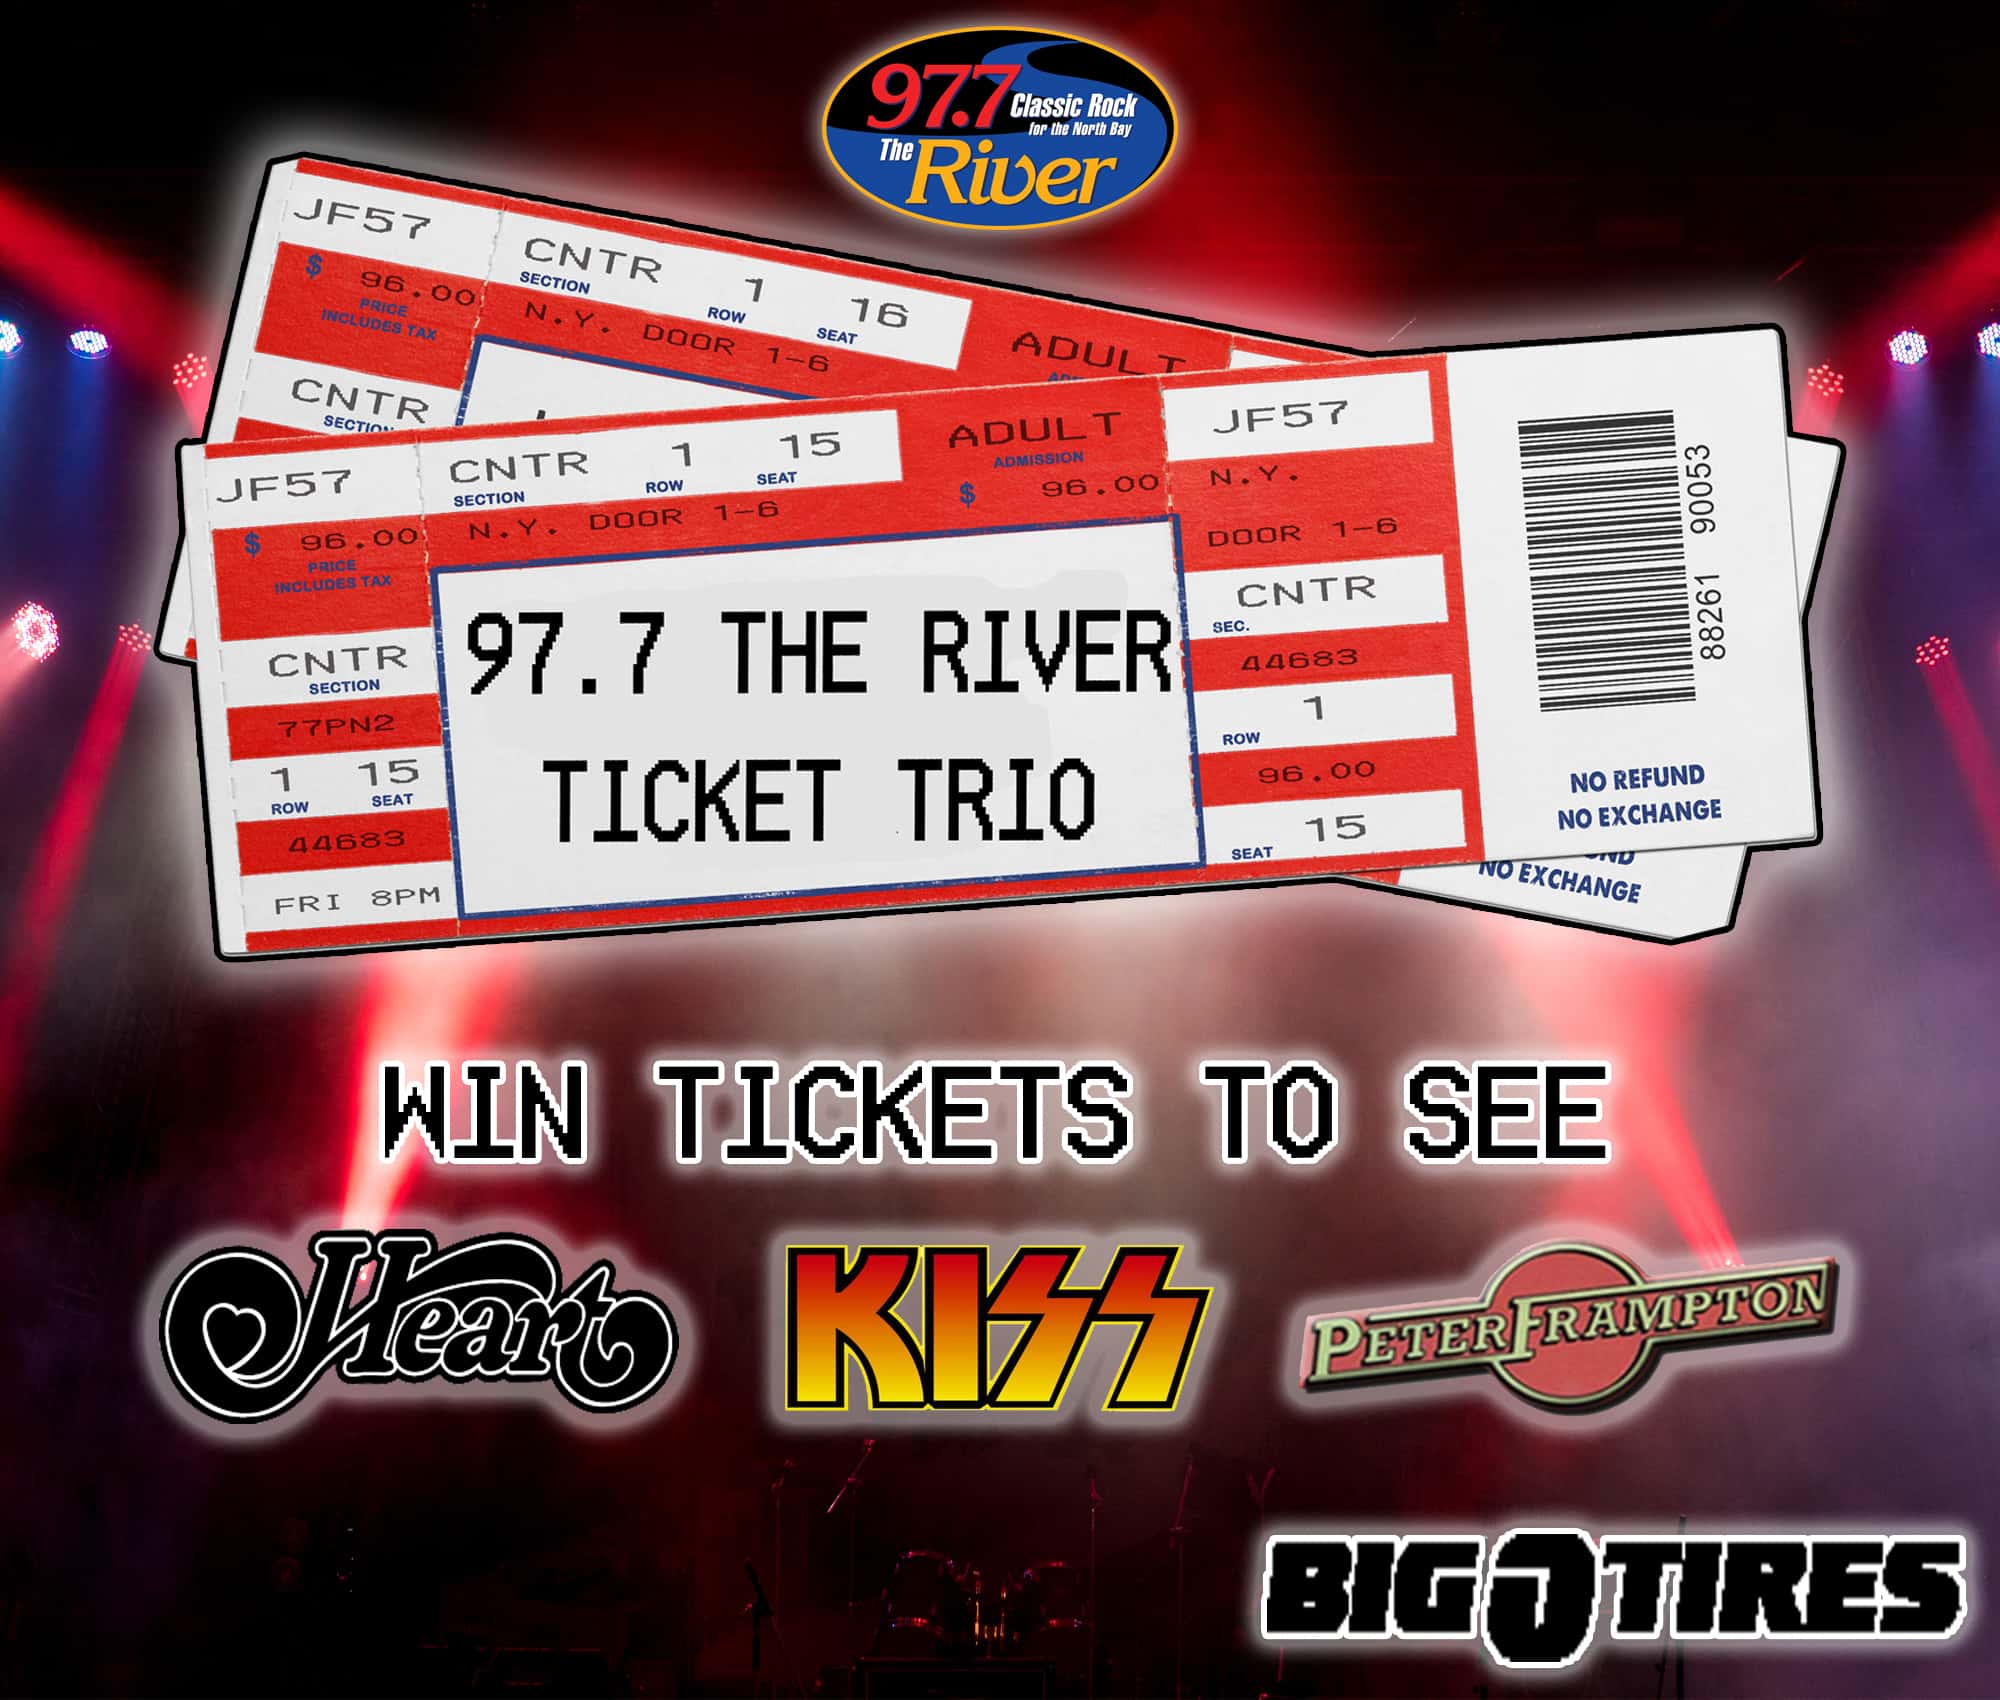 Big O Tires Ticket Trio 97.7 The River